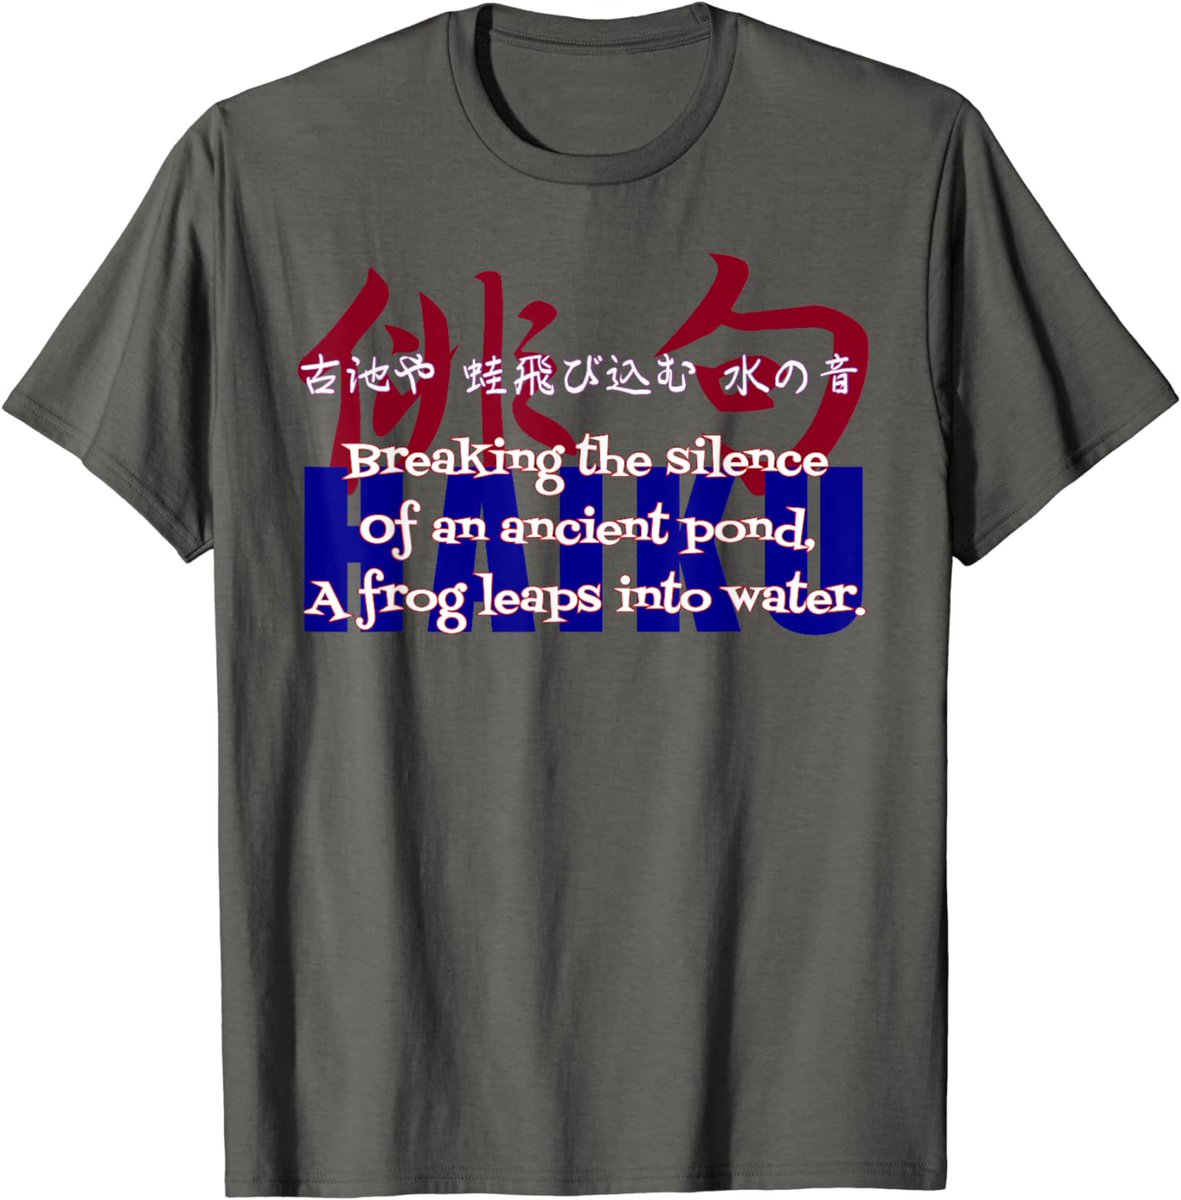 Breaking the Silence Haiku T-Shirt
amazon.com/dp/B0CTG9BFFD?…
#tshirts #tshirtprinting #shirts #fashion #t-shirt #tshirt #poem #poems #lyrics #words #haiku #silence #Japanese #font #Japan #design #print #printing #originaldesign #originalprint